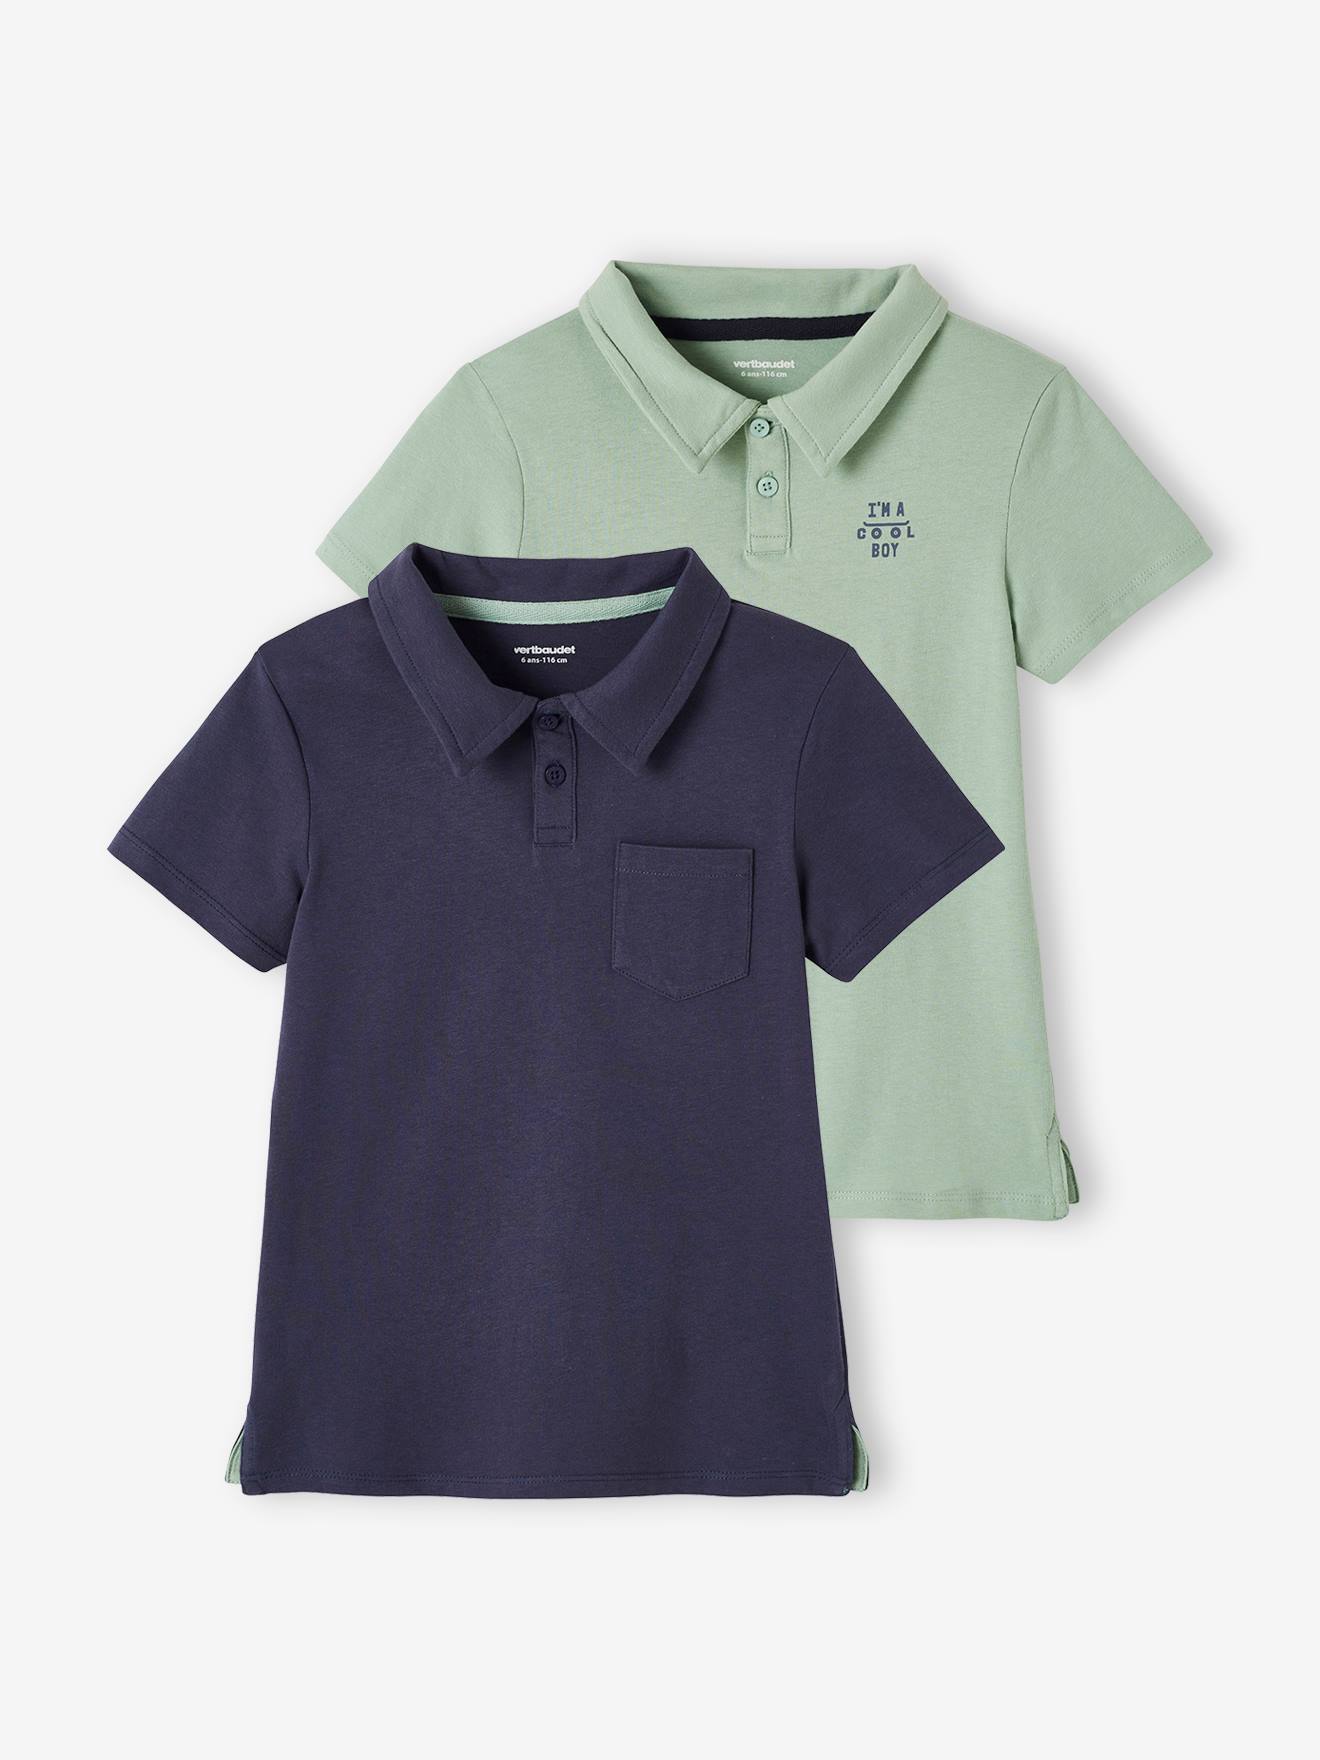 Politistation Fjern Uberettiget Set of 2 Plain, Short Sleeve Polo Shirts, for Boys - blue light solid with  design, Boys